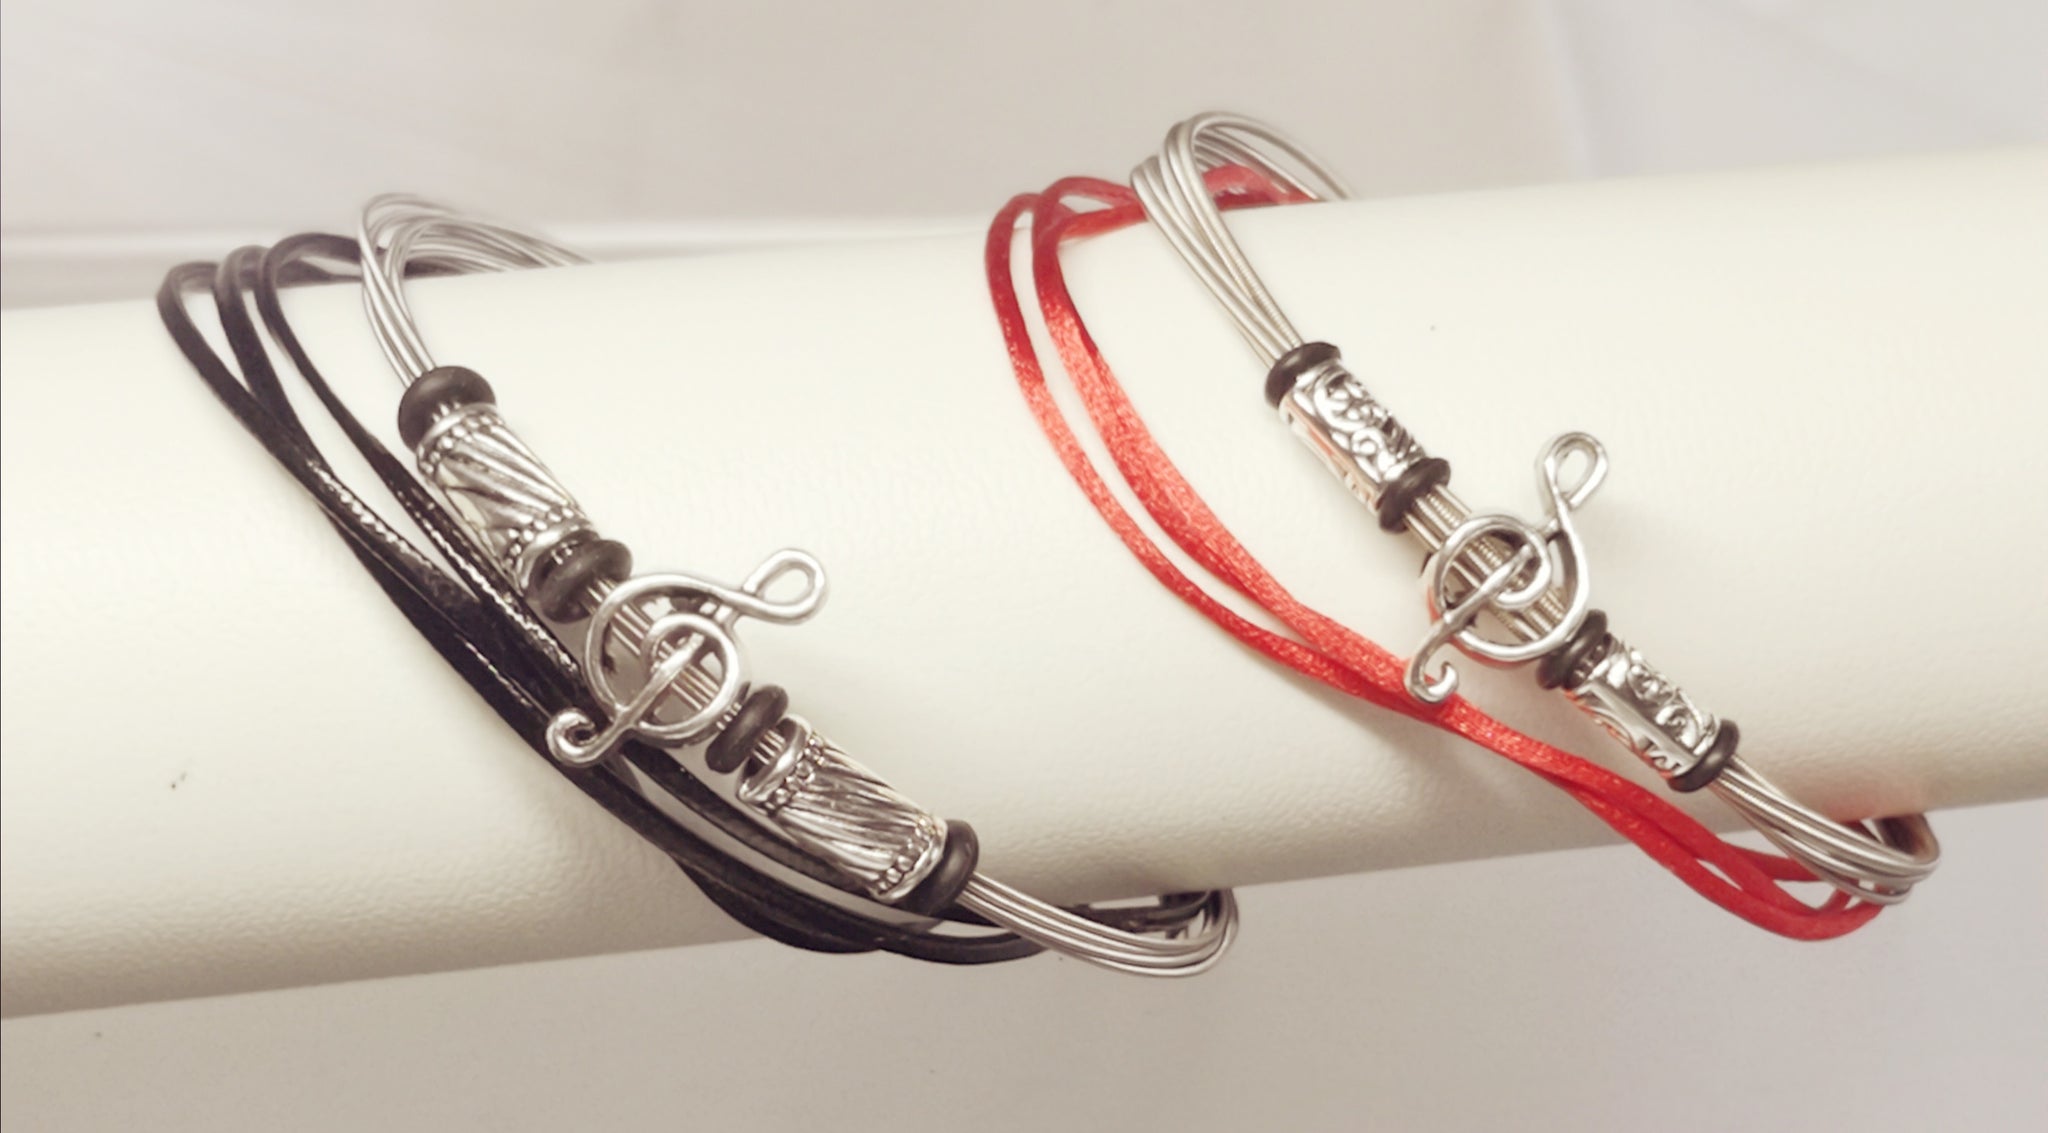 Treble Clef Guitar String Bracelet – Re-String Jewellery